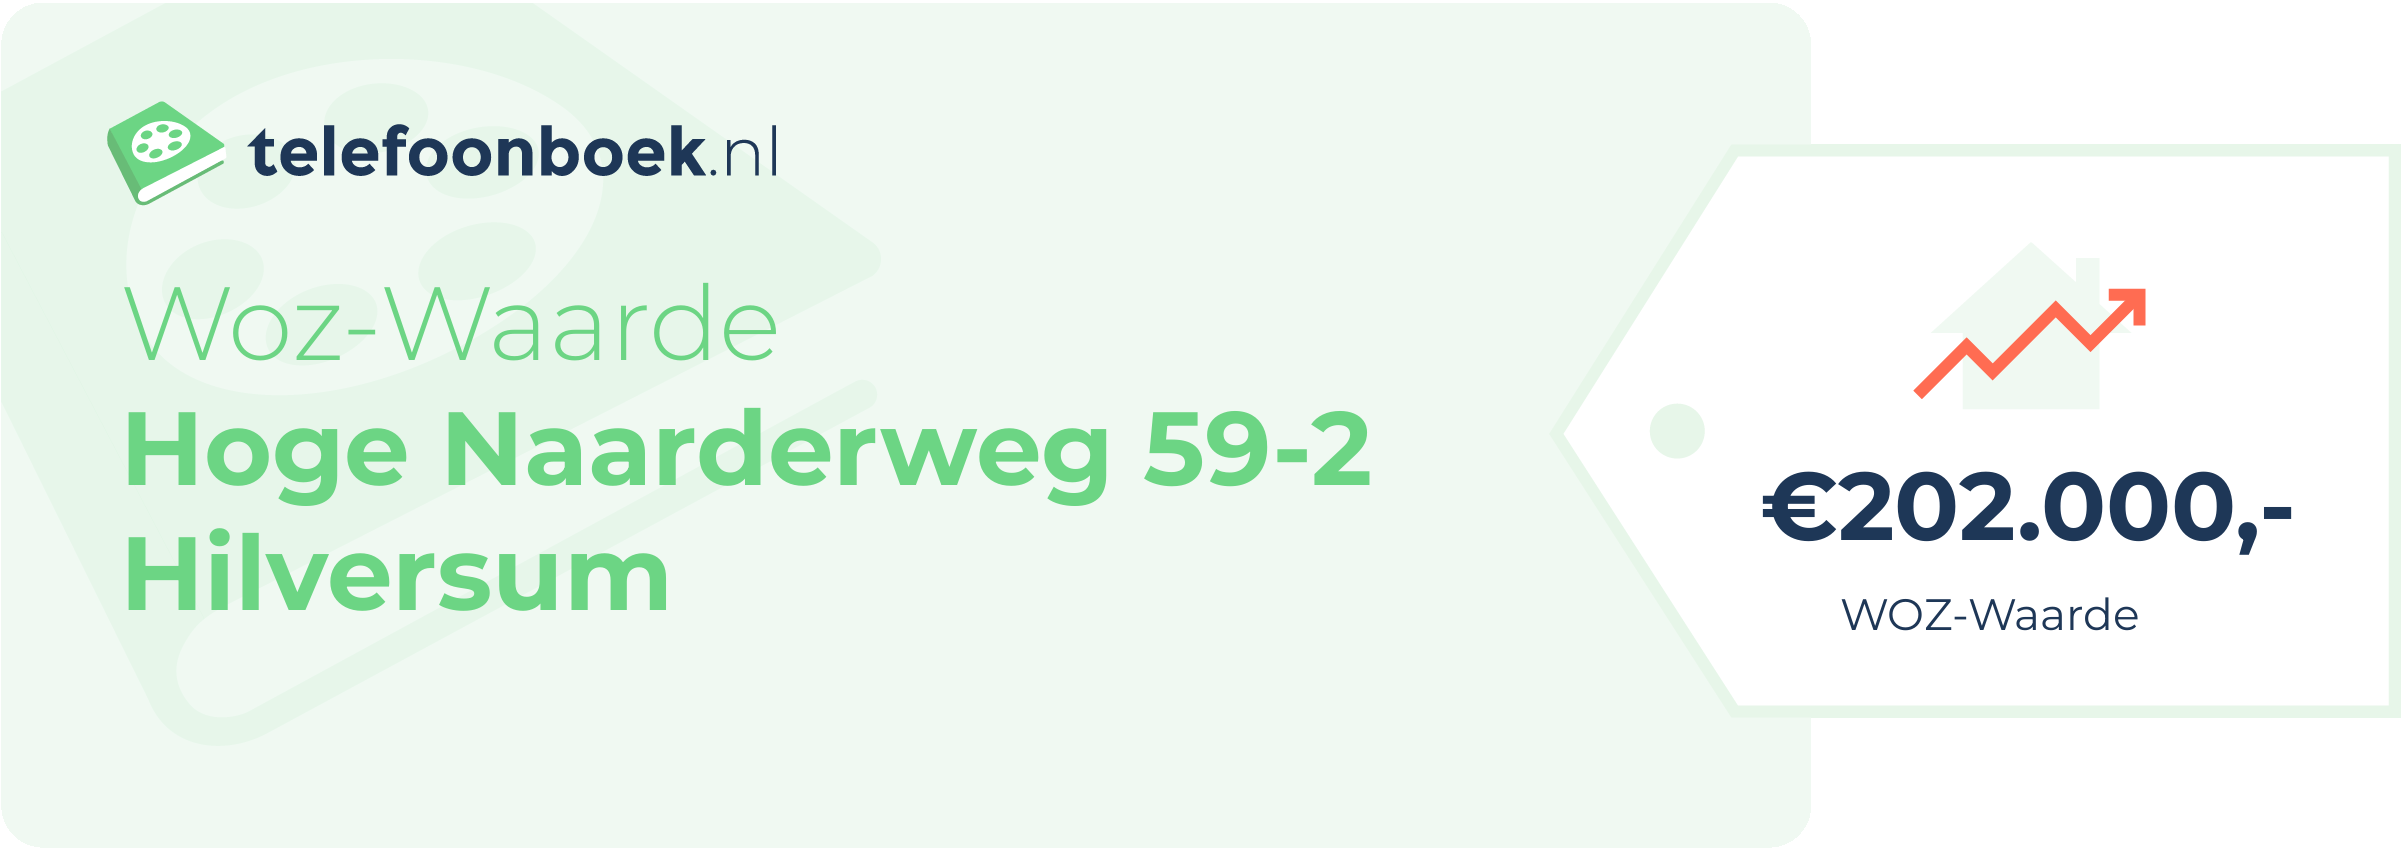 WOZ-waarde Hoge Naarderweg 59-2 Hilversum